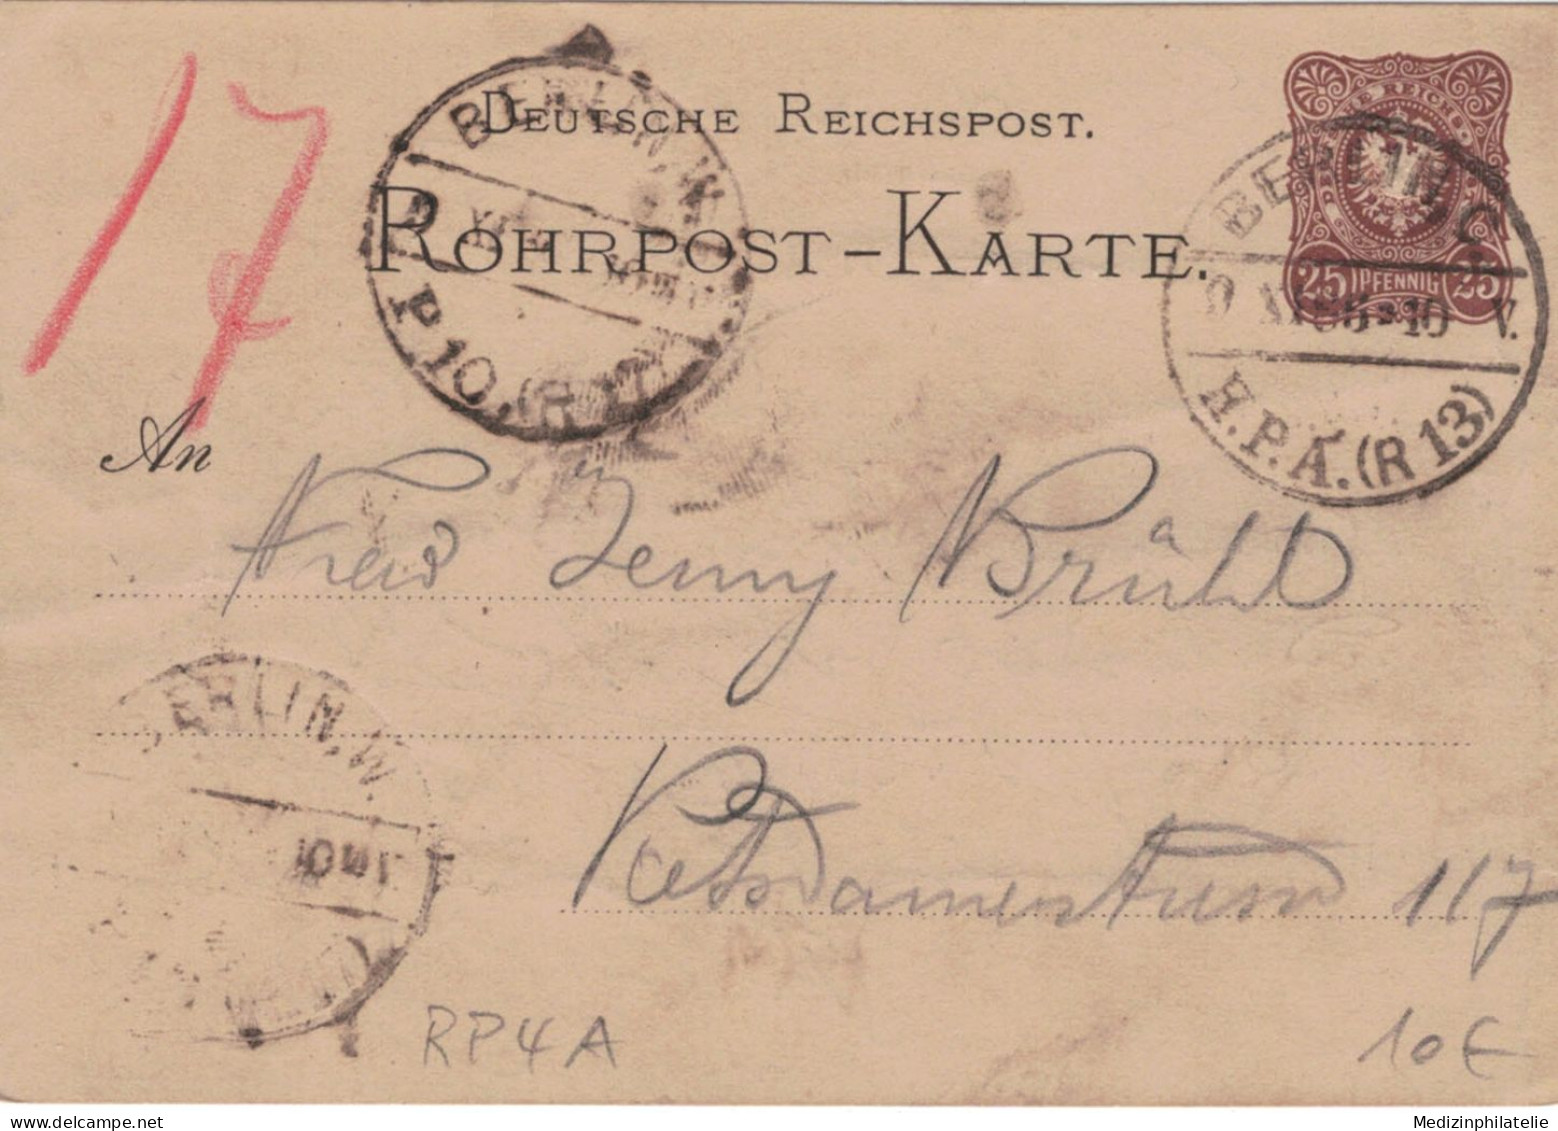 Rohrpost-Karte 25 Pf. Adler In Ellipse - 4 A - Berlin H.P.A. 1886 13 > 17 - Postcards